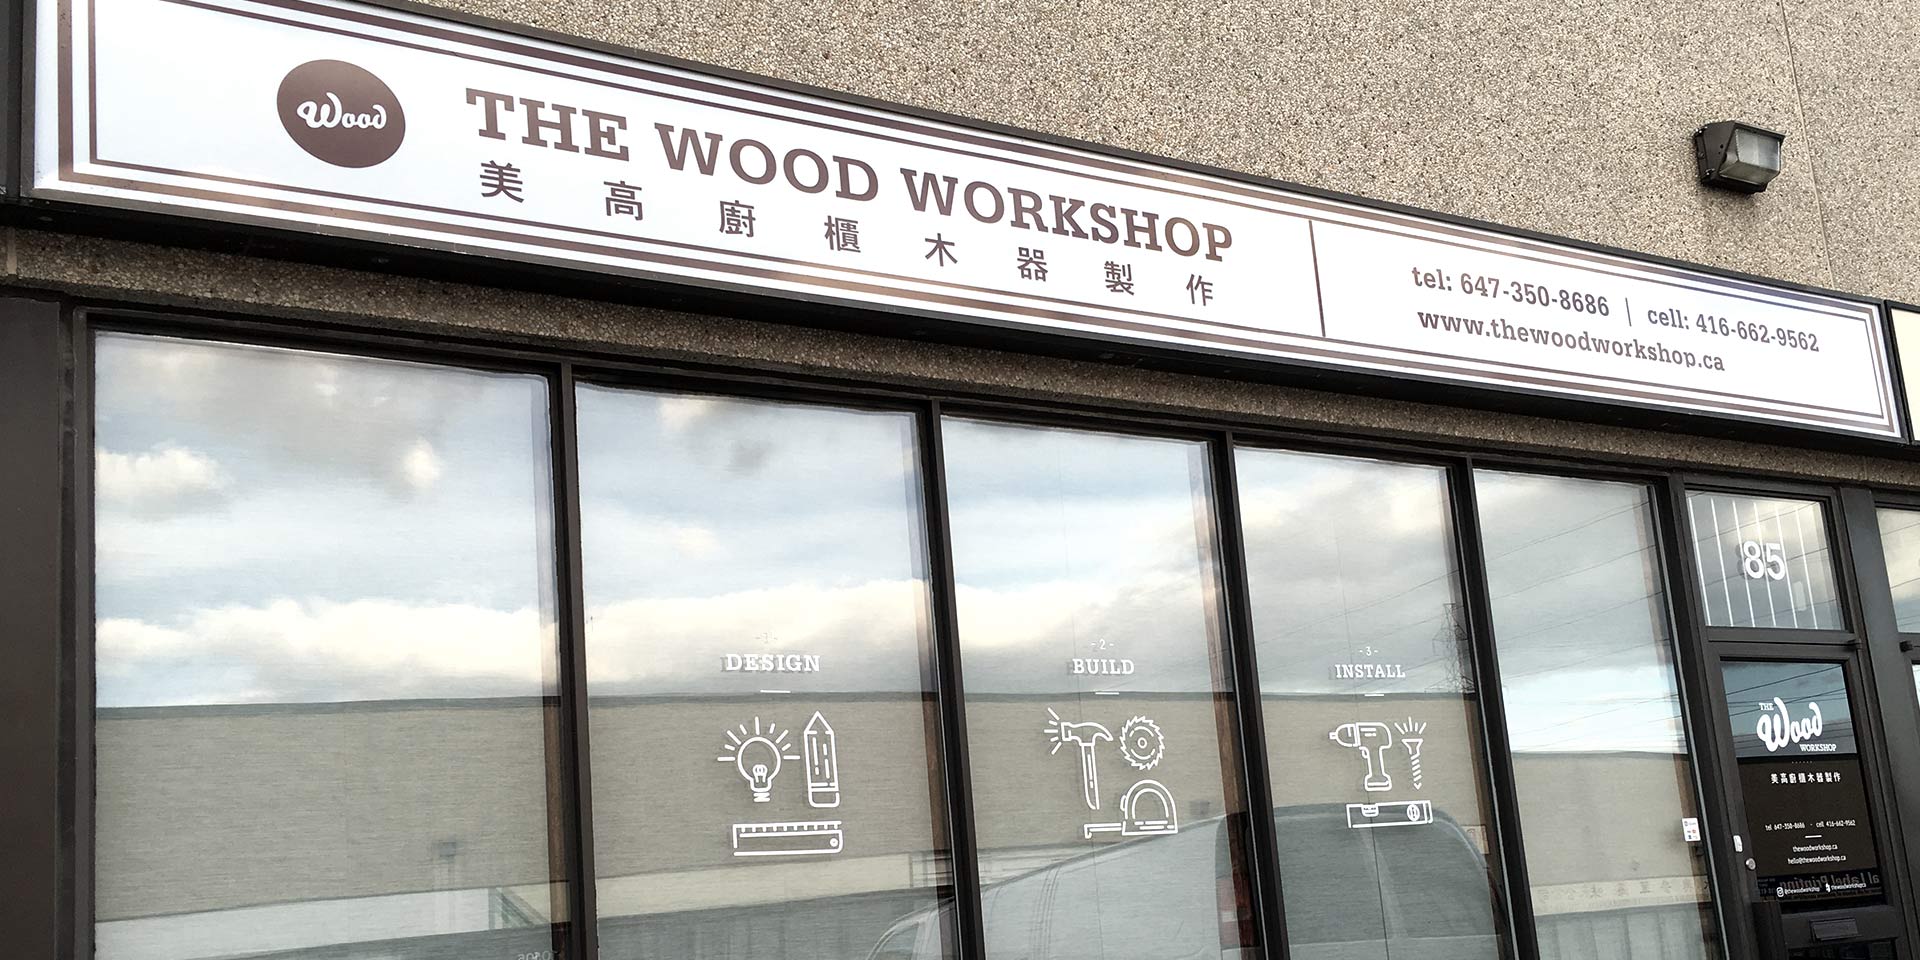 The Wood Workshop signage